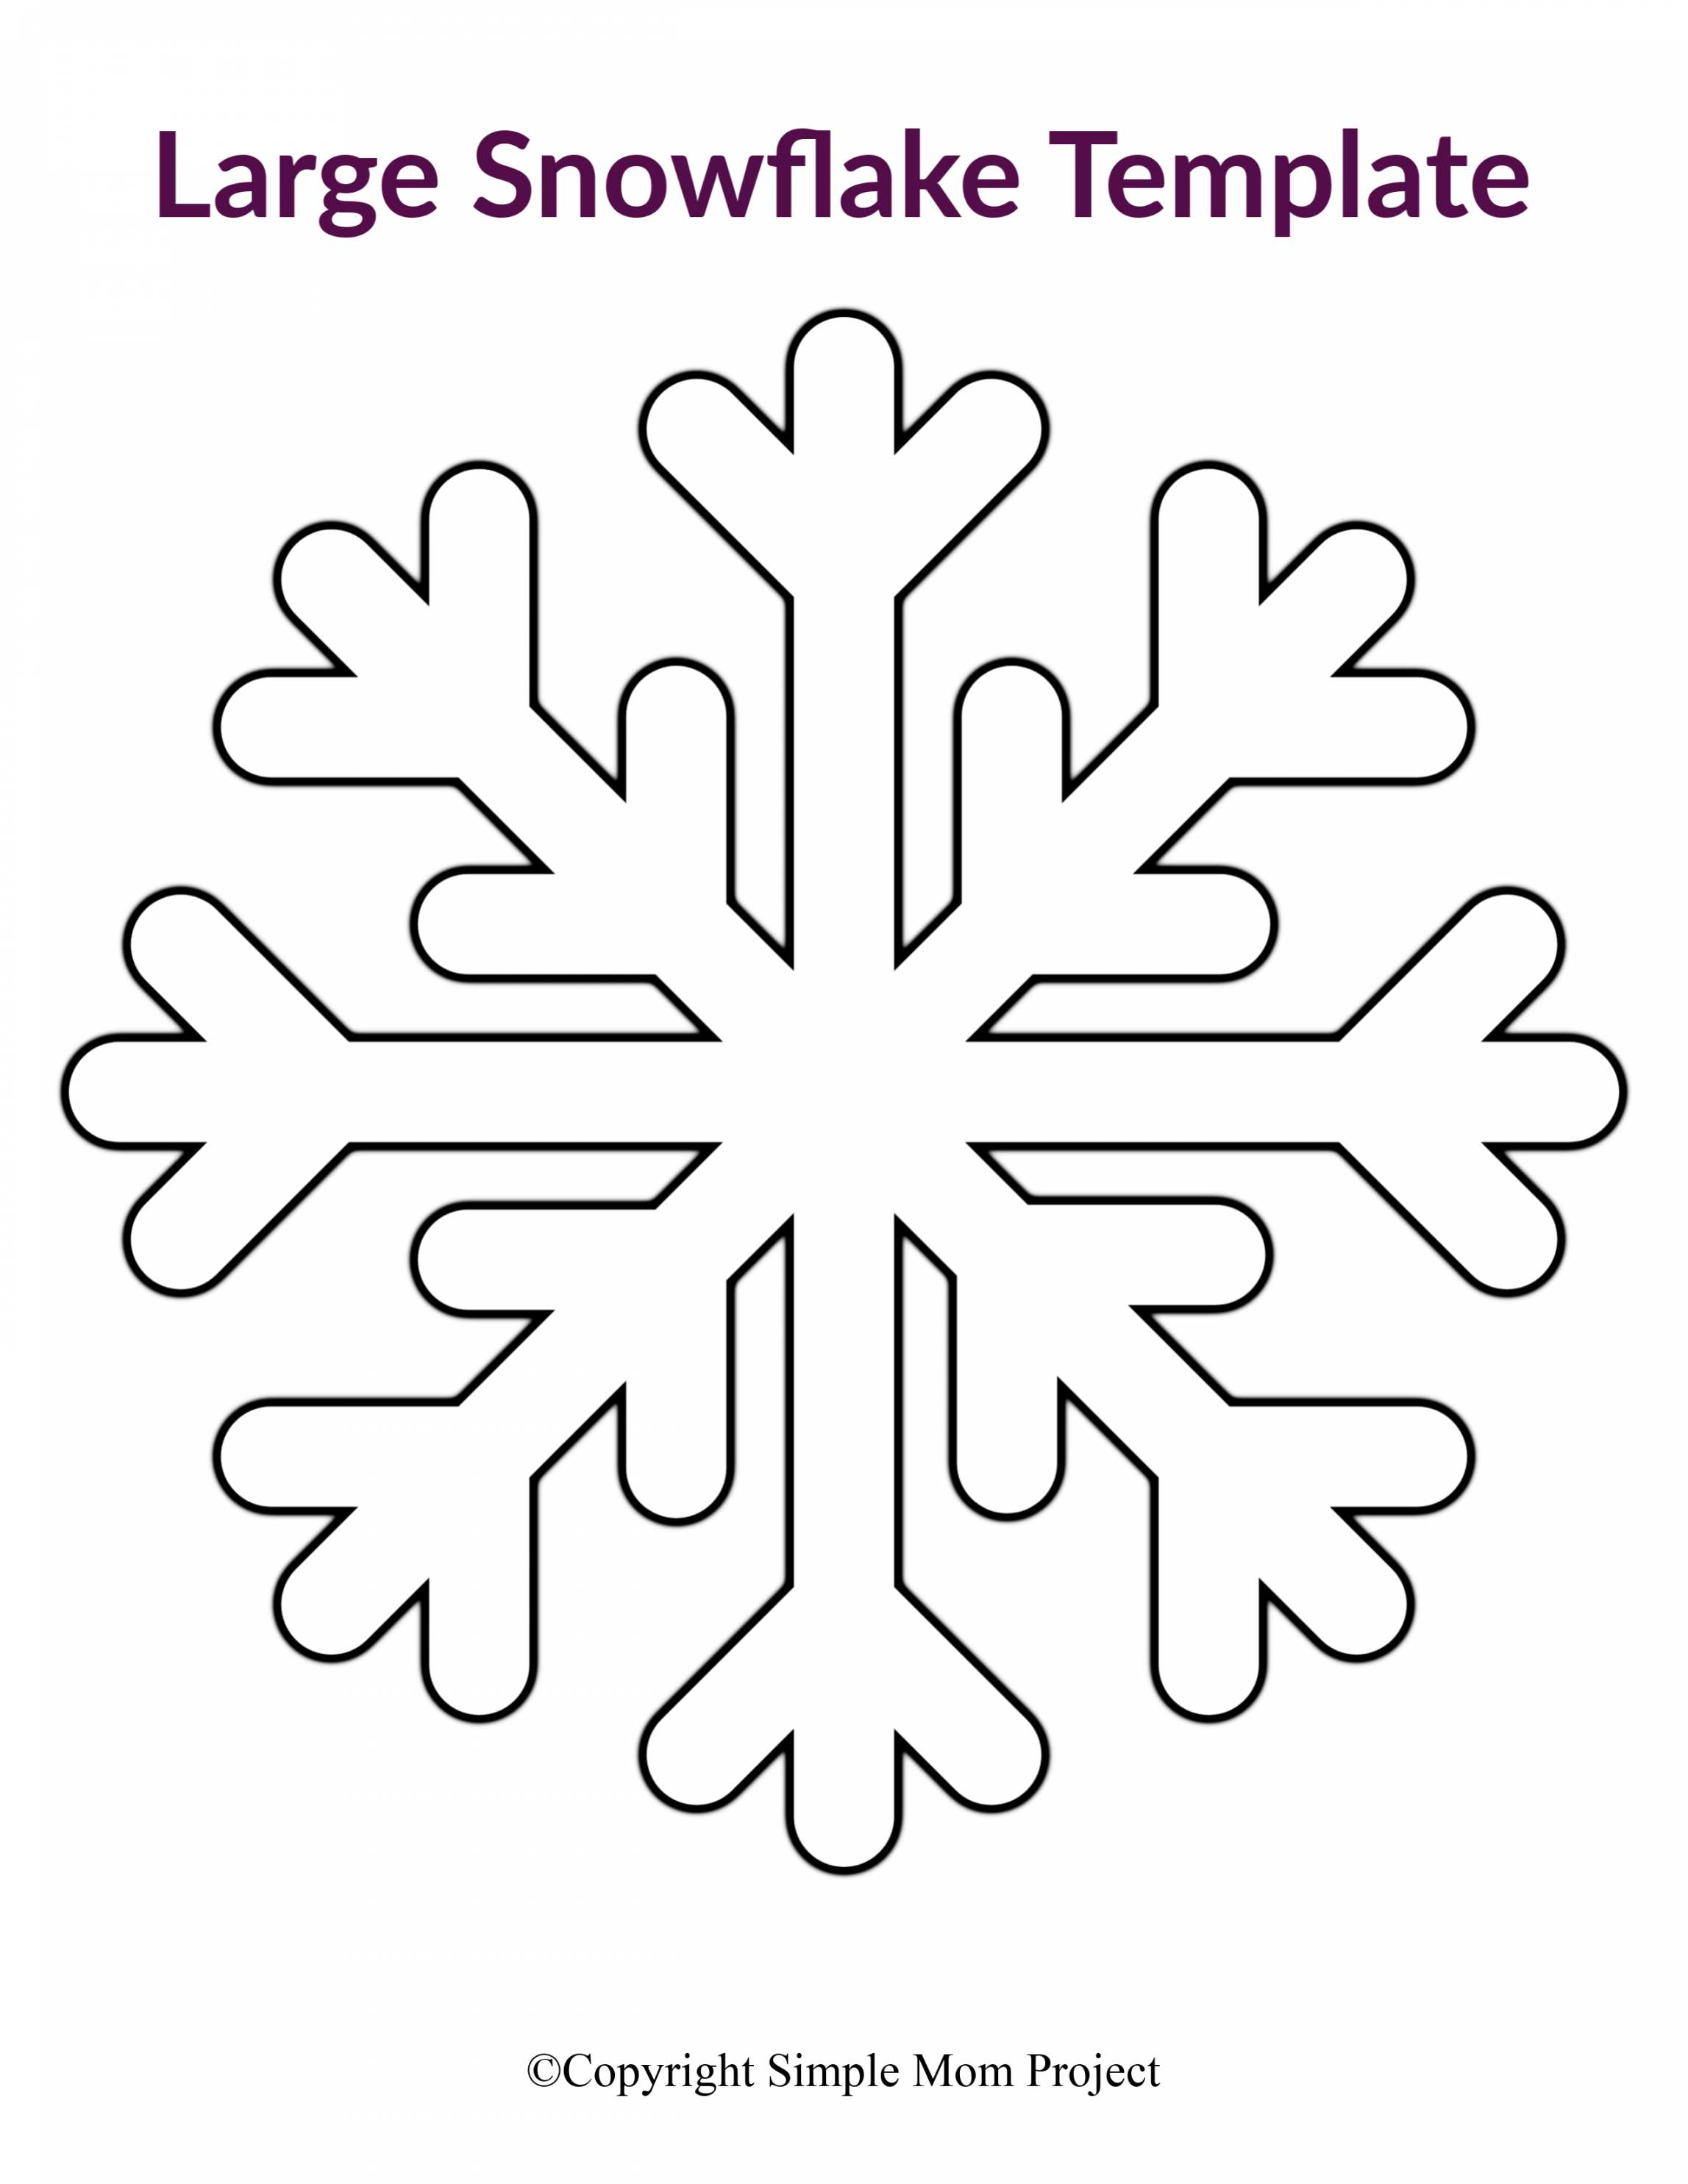 Free Printable Large Snowflake Templates - Simple Mom Project - FREE Printables - Snowflake Print Out